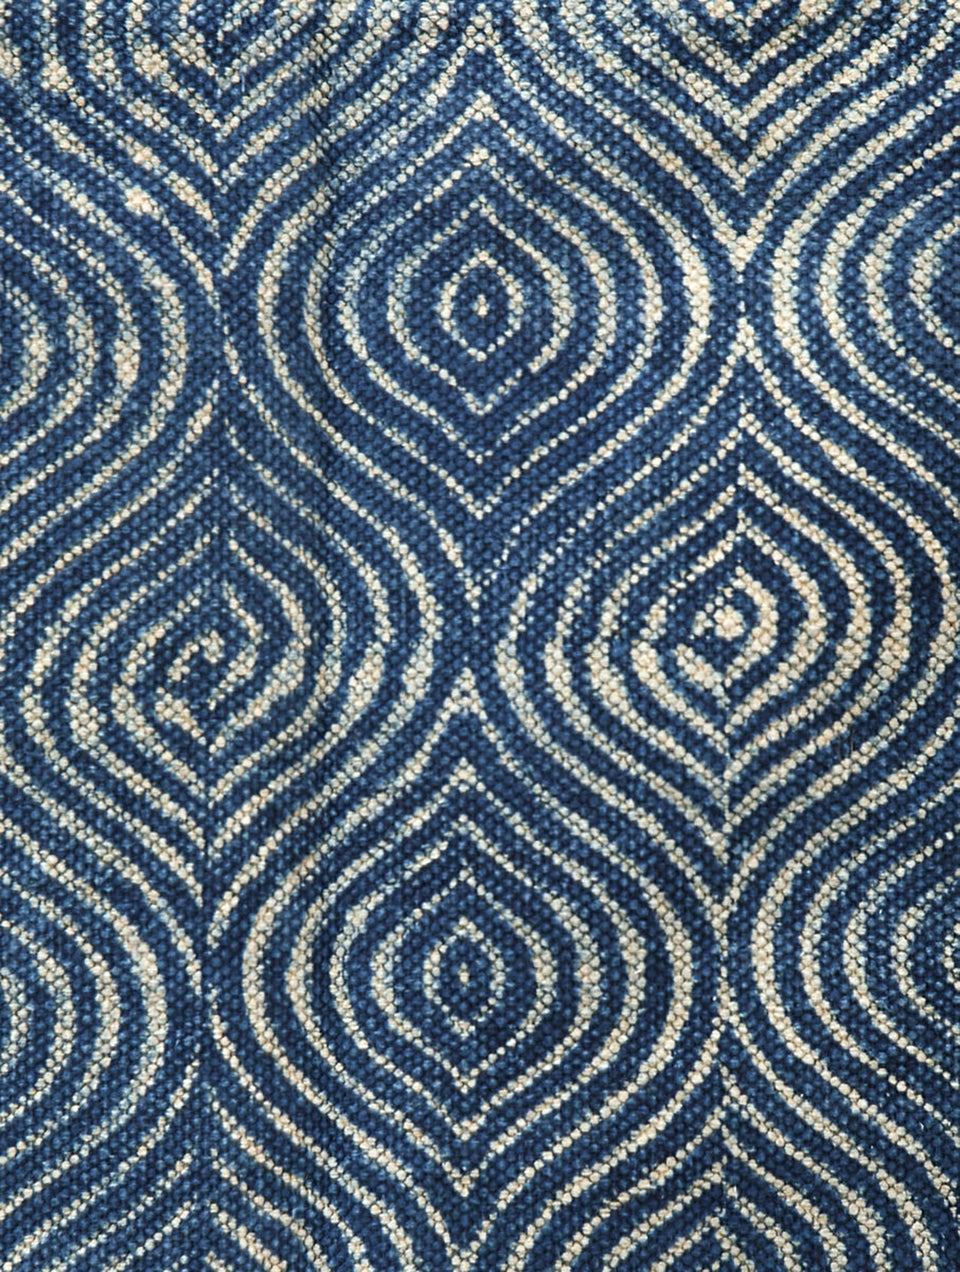 Jain Arts Blue Handwoven Cotton Printed Rug - 3'X5'